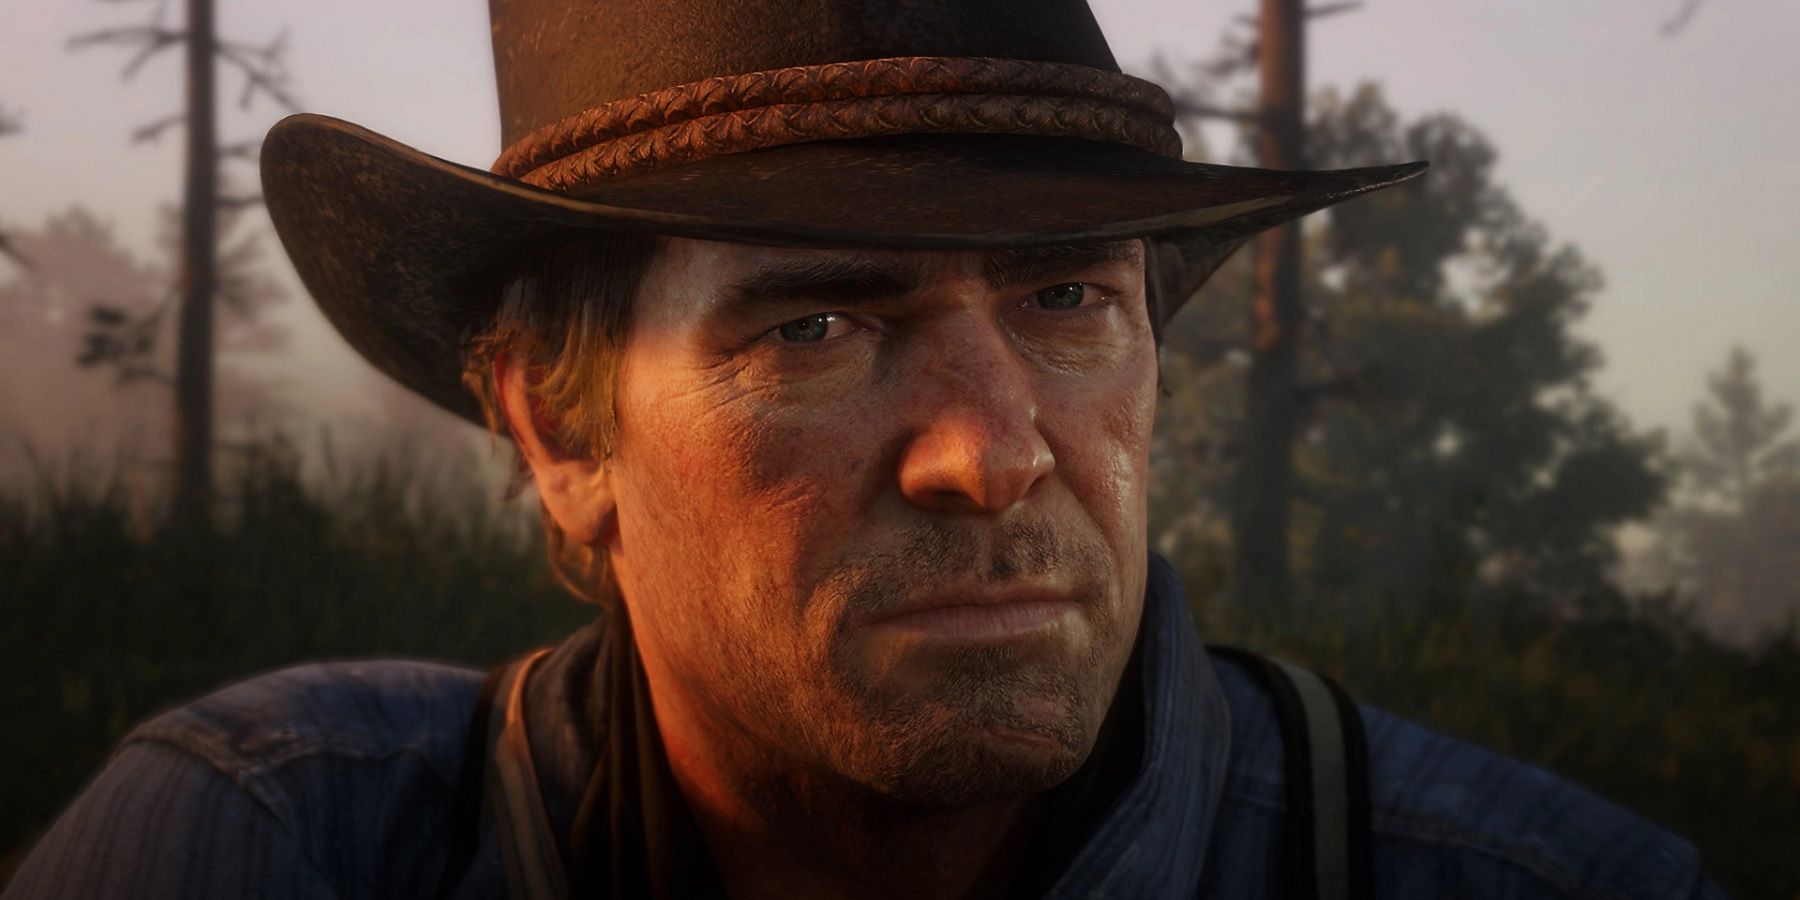 Apparentemente Rockstar dice addio a Red Dead Redemption 2